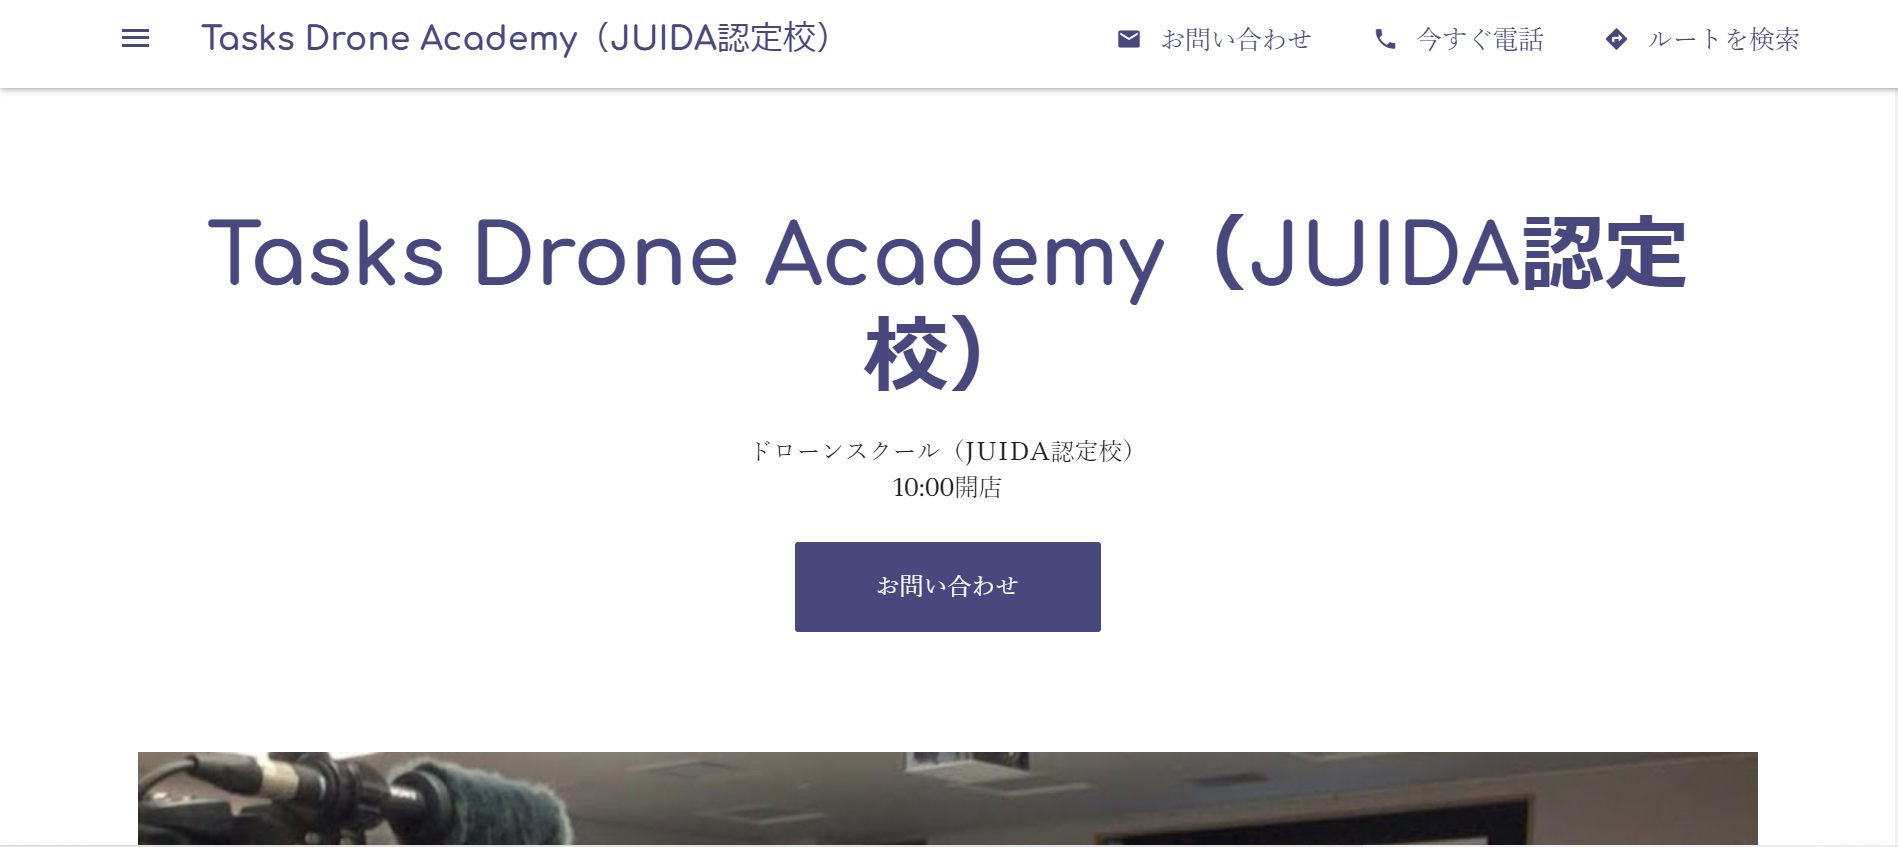 Tasks Drone Academy神戸校